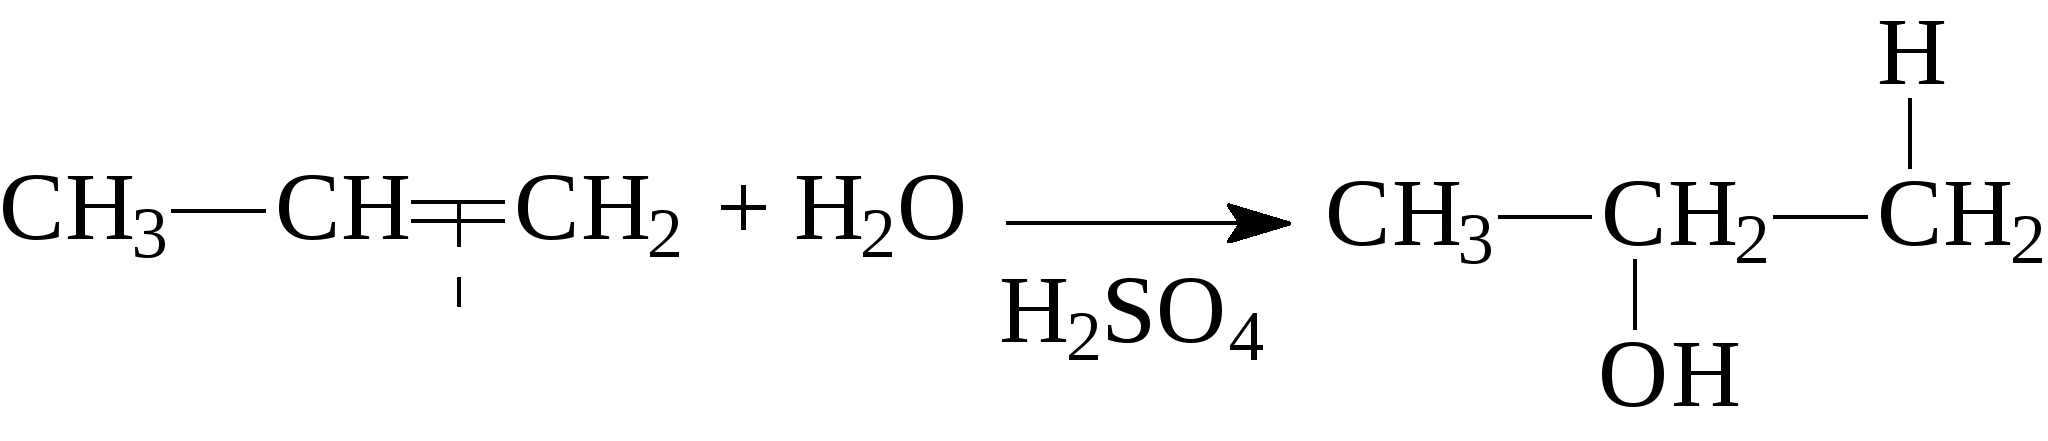 Соединение 2 метилбутанол 1. Гидрирование 2-хлорпентен-2. 2 Метилбутанол 2 и серная кислота. 2 Метилбутанол и серная кислота. 2 Метилбутен 2 и серная кислота.